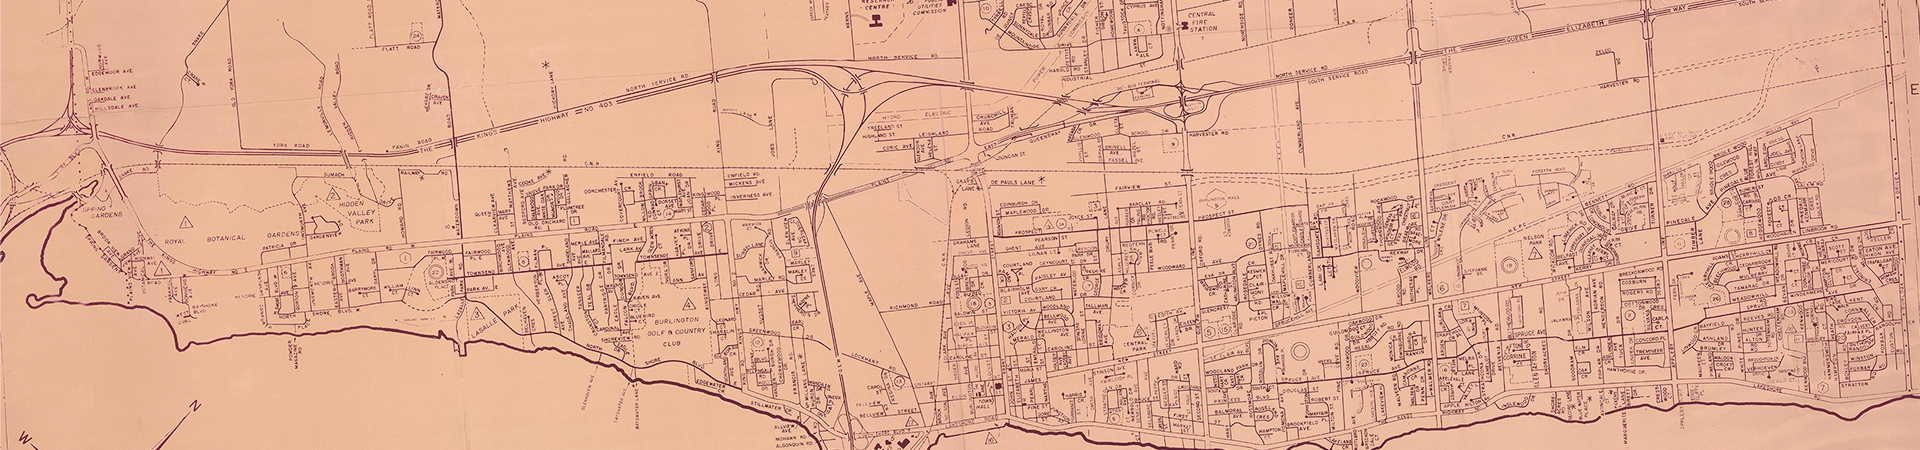 City of Burlington Planning Department, large street map revised January 1974